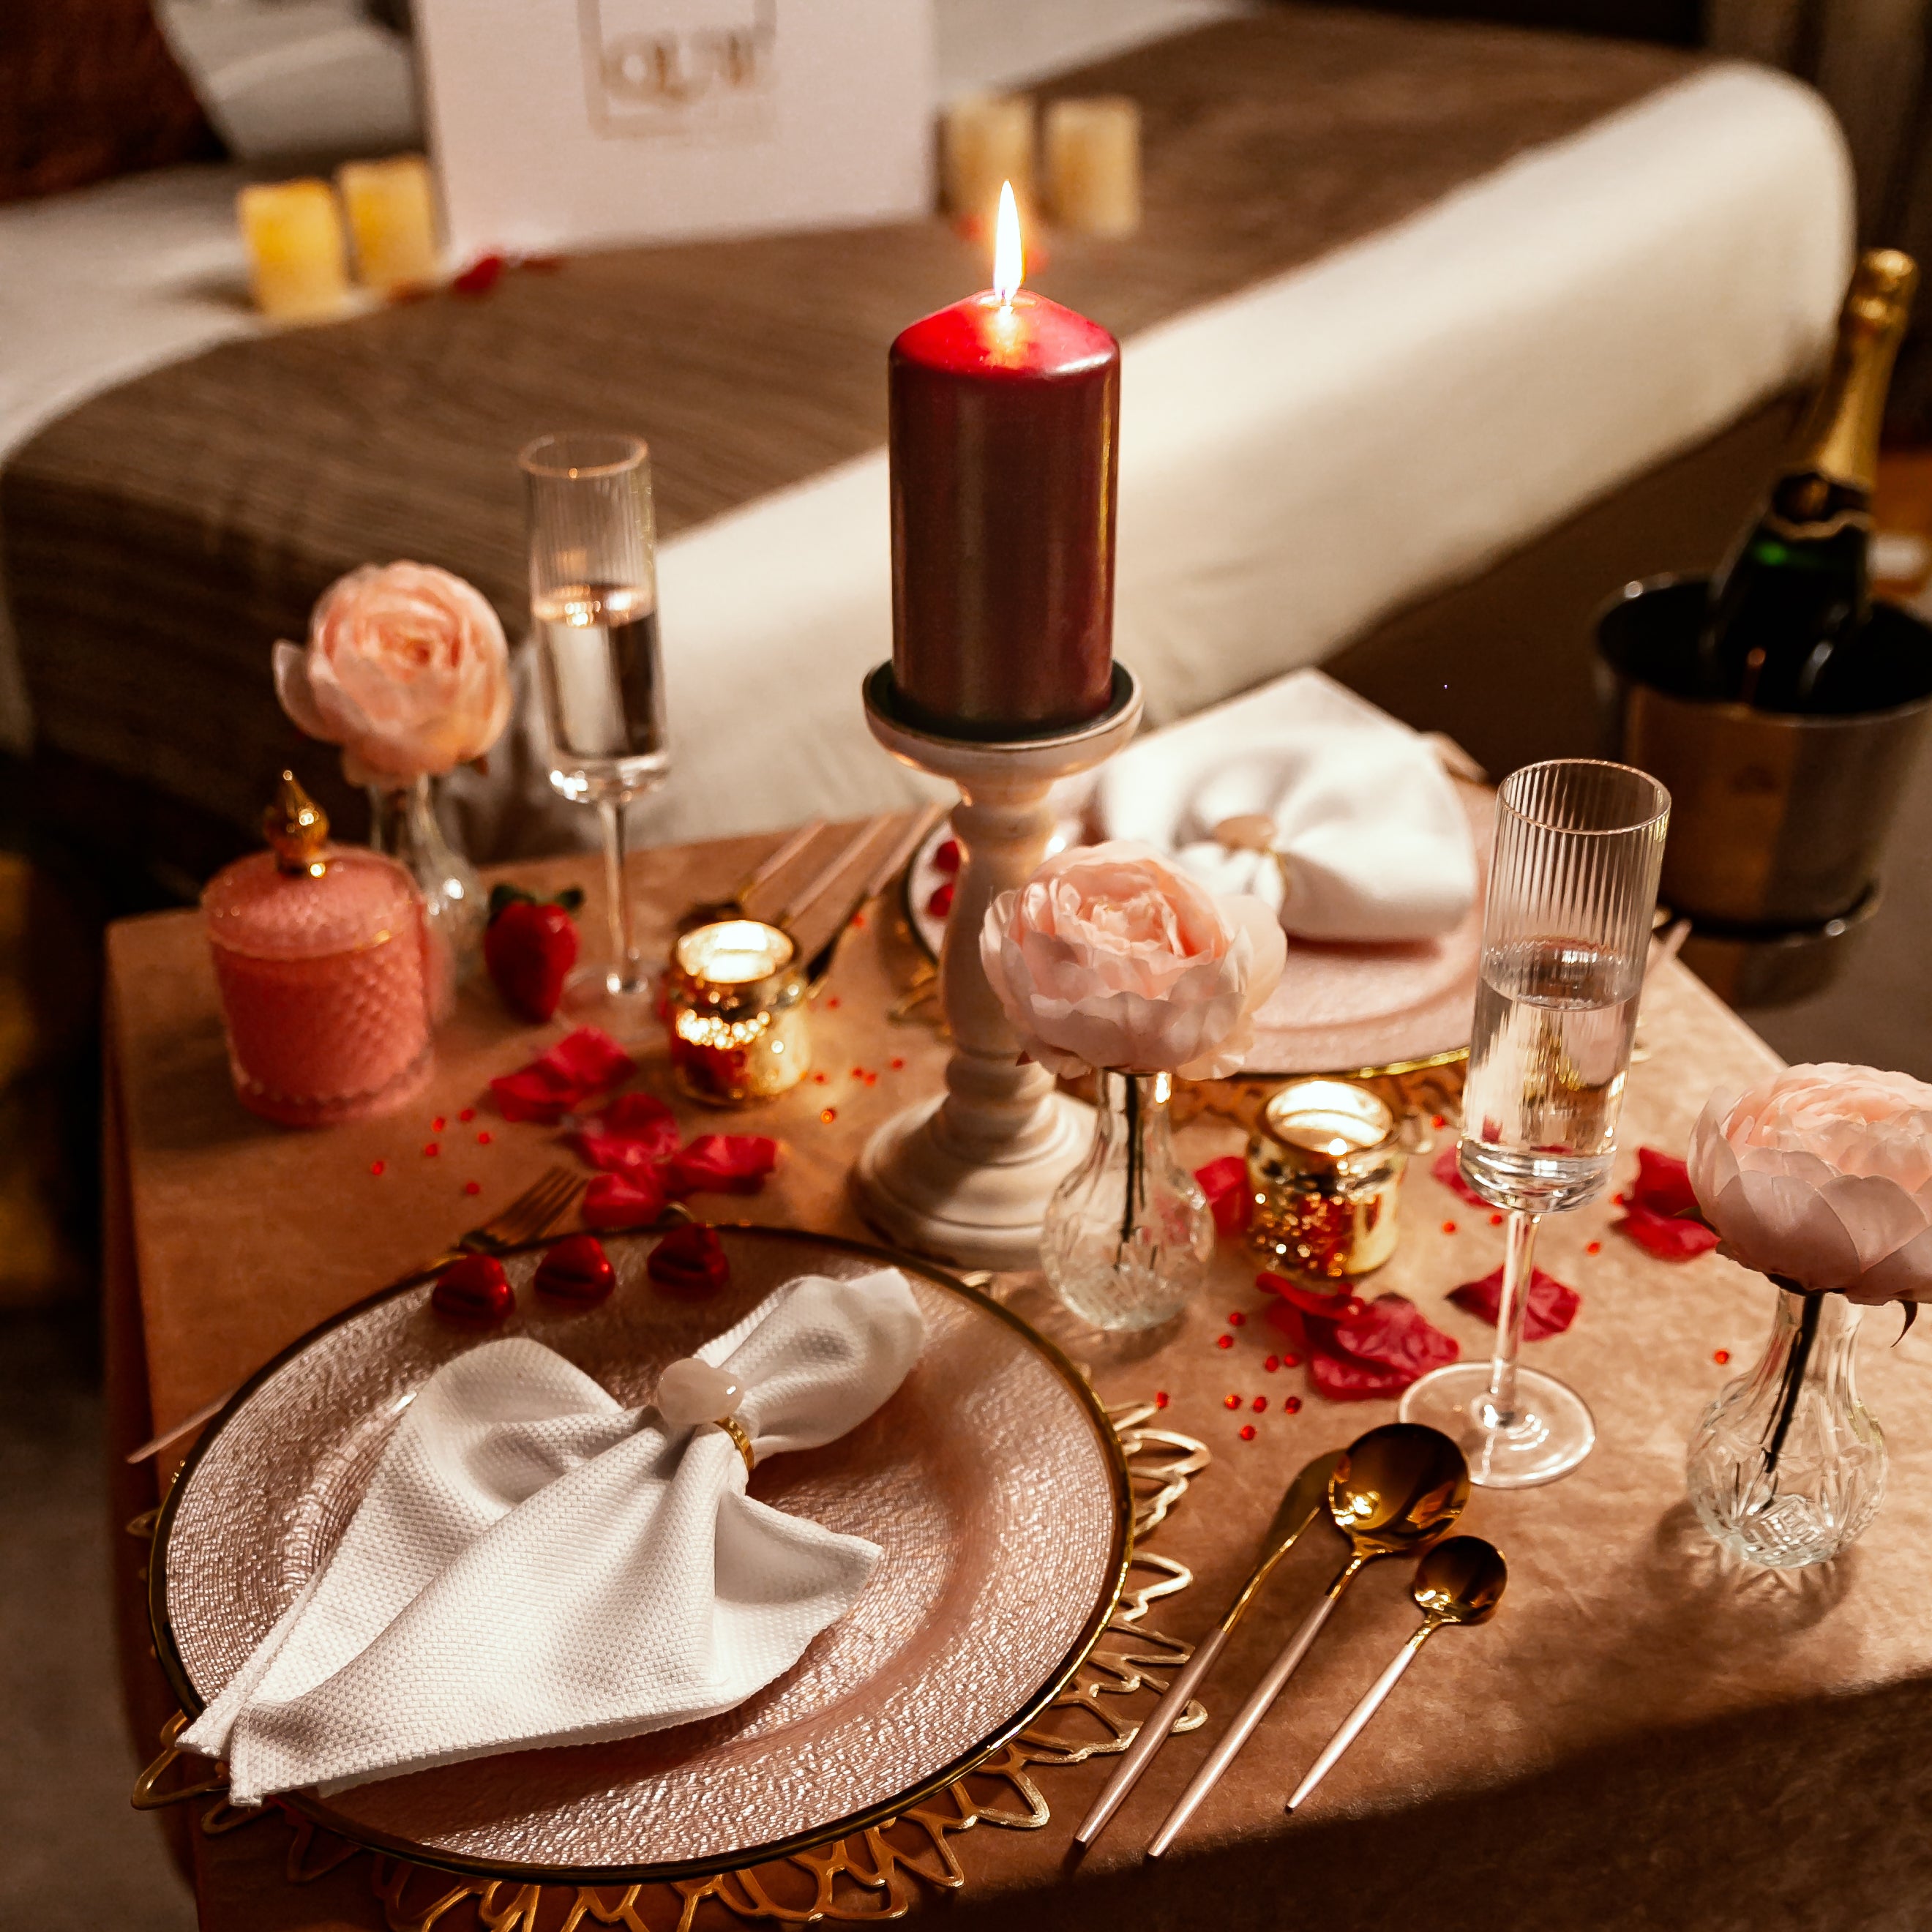 Ultimate Romantic Night In - Tablescape & Decoration Set - Tablescape for 2